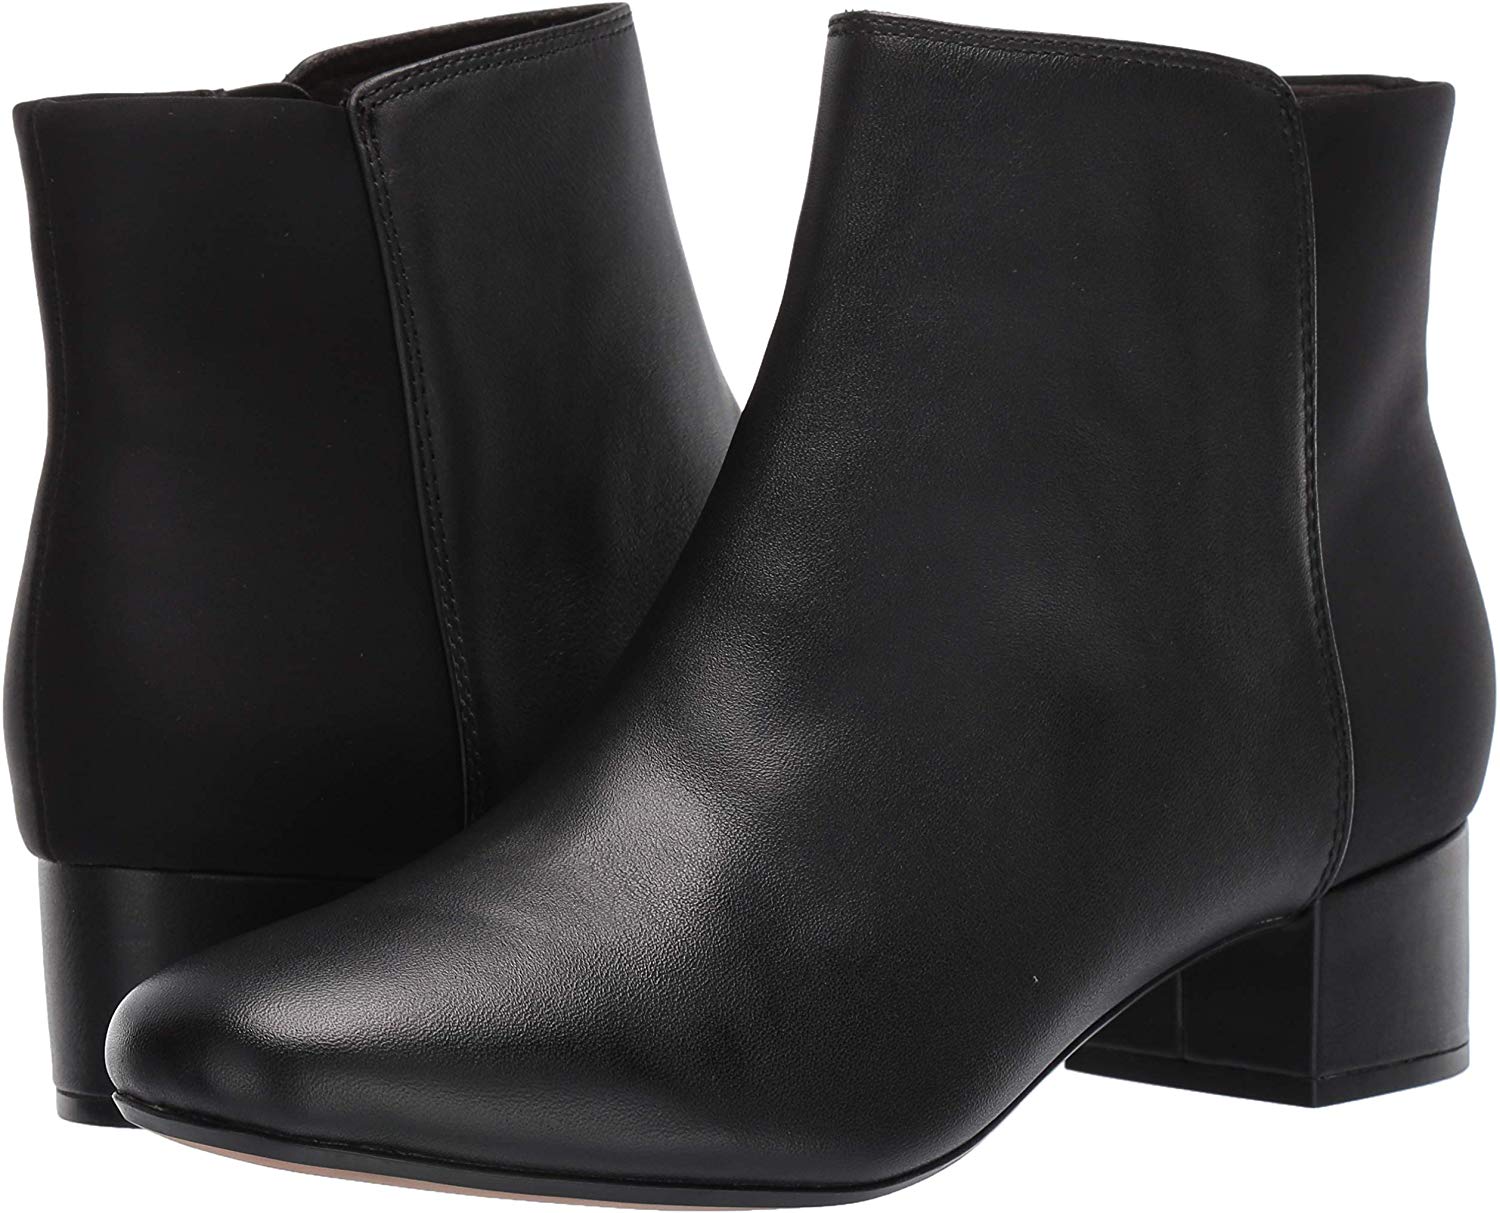 CLARKS Women's Chartli Valley Ankle Boot, Black, Size 8.5 NdLS | eBay